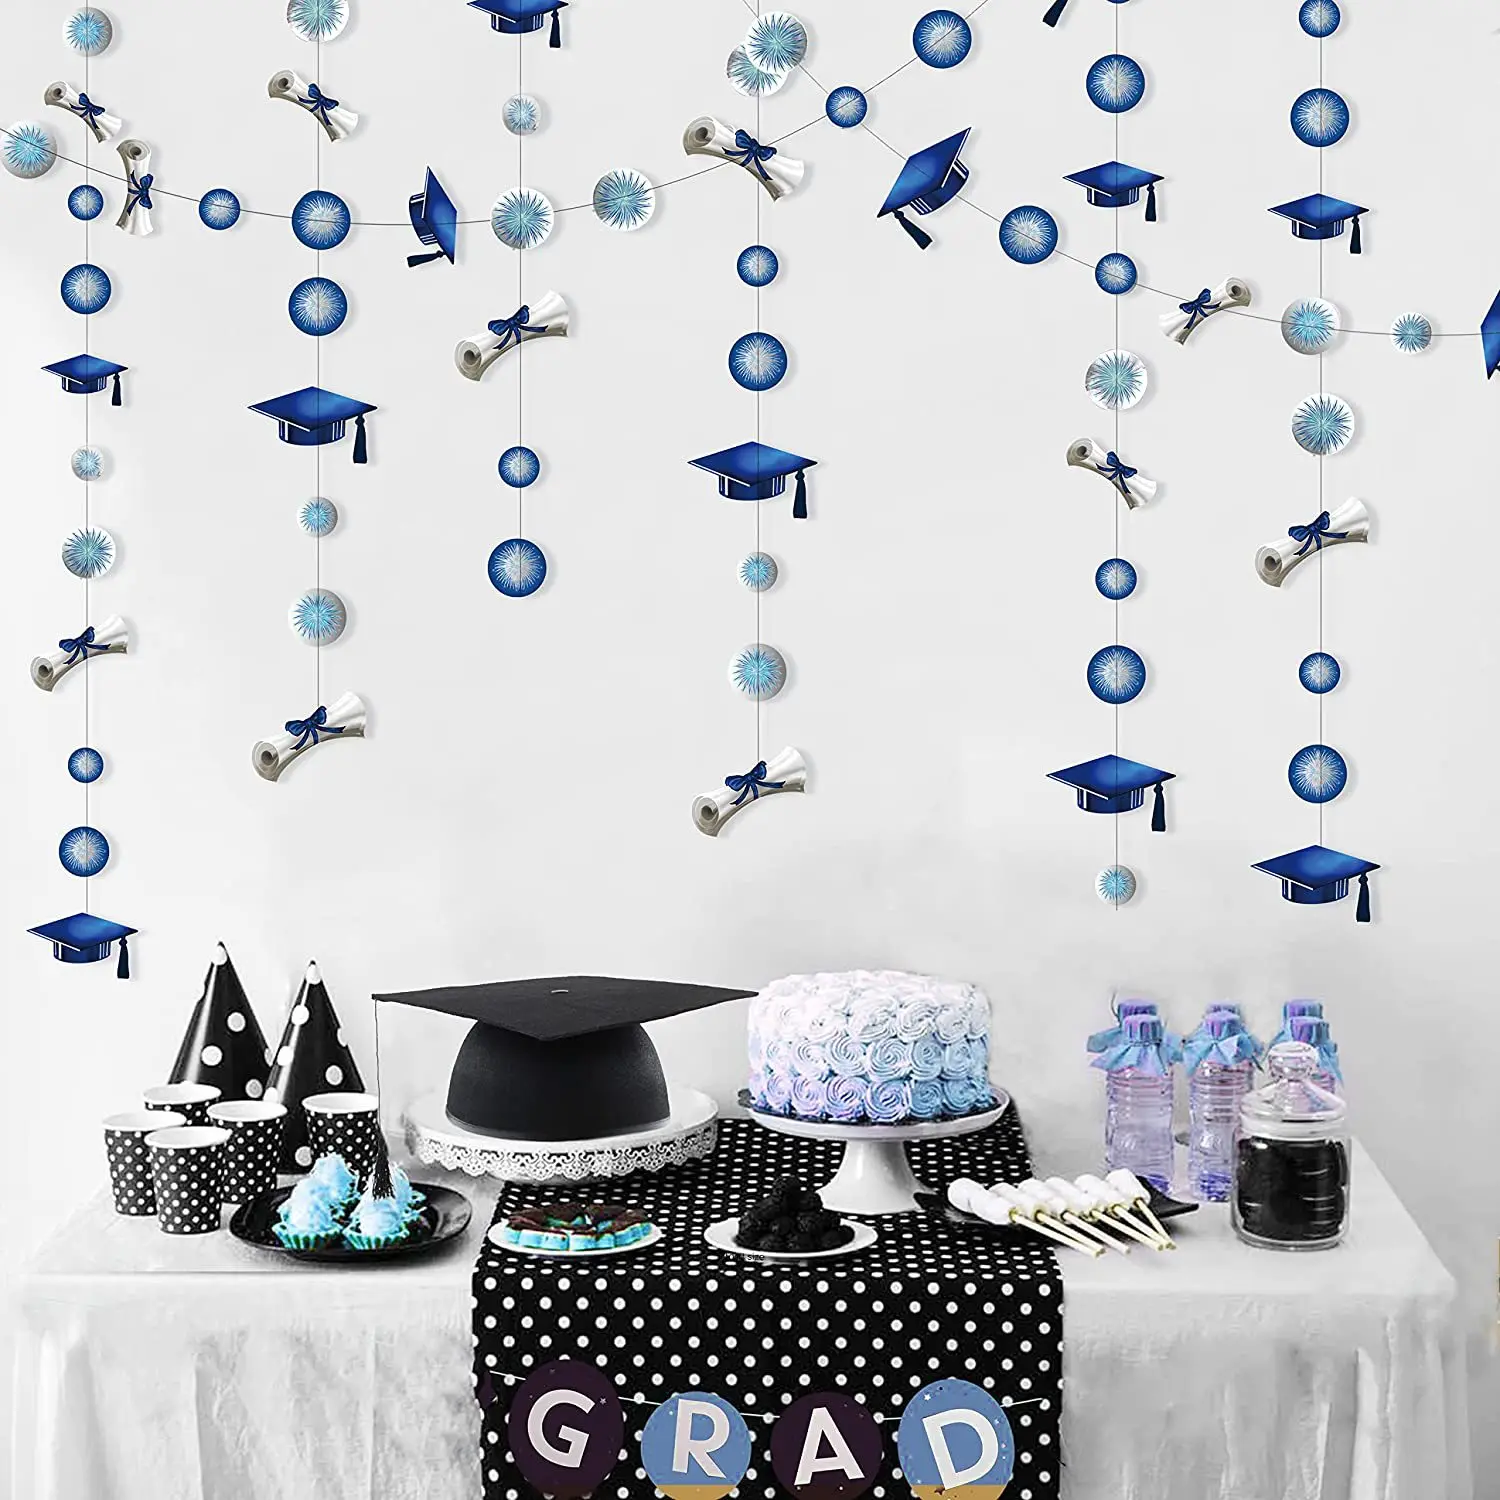 

Graduation Hat Diploma Star Garland Banner Streamer Backdrop for Graduation Party Supplies Classroom School Grad Home Decor